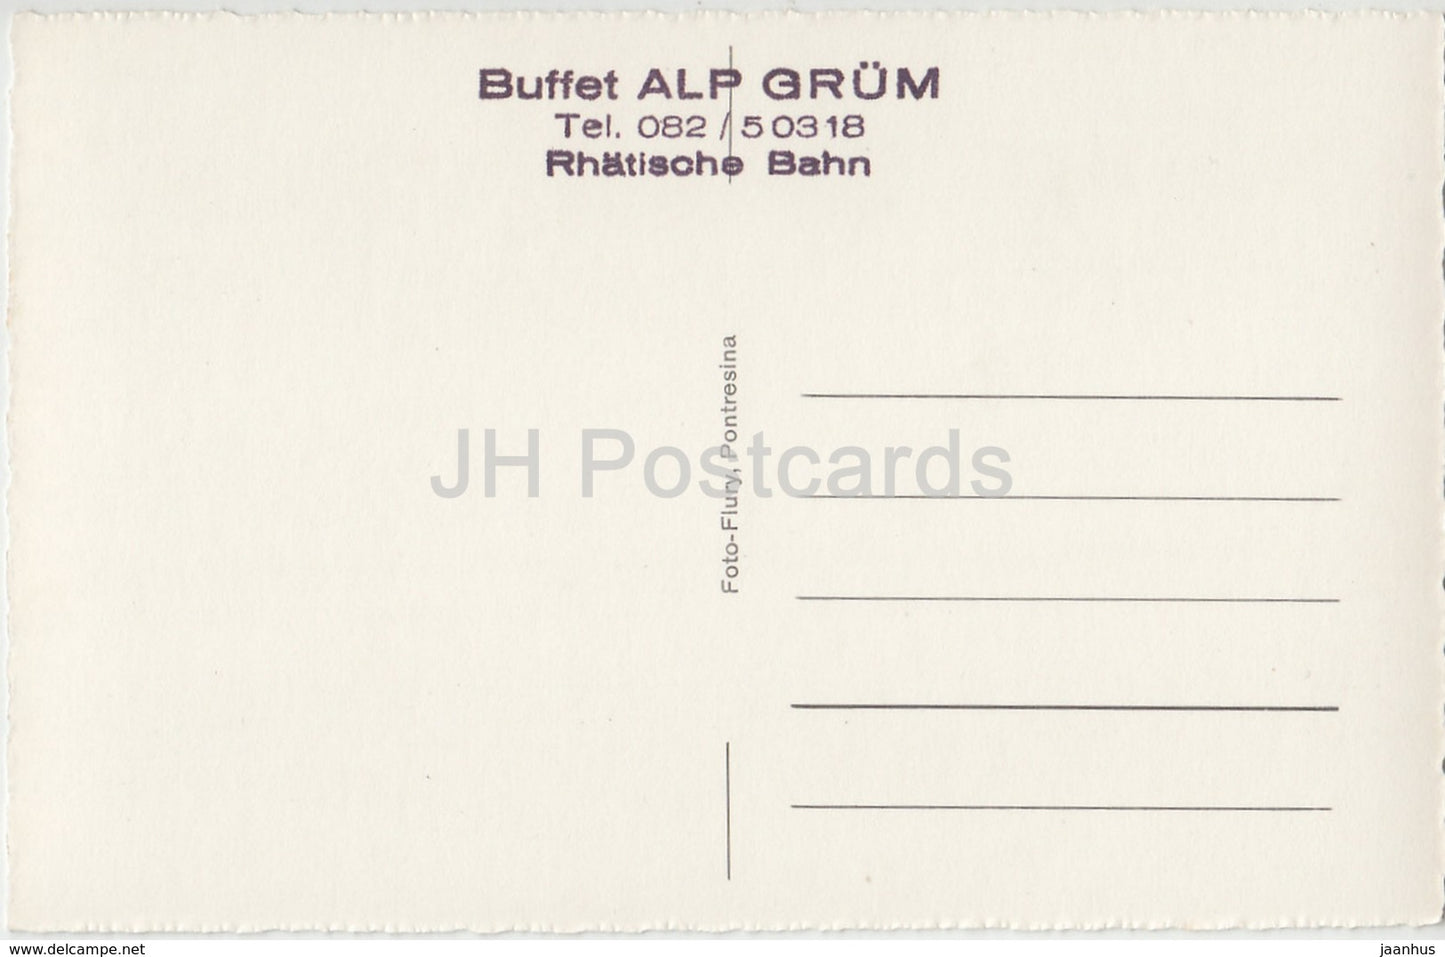 Bernina - Multiview - Buffet Alp Grum 14 - Schweiz - alte Postkarte - unbenutzt